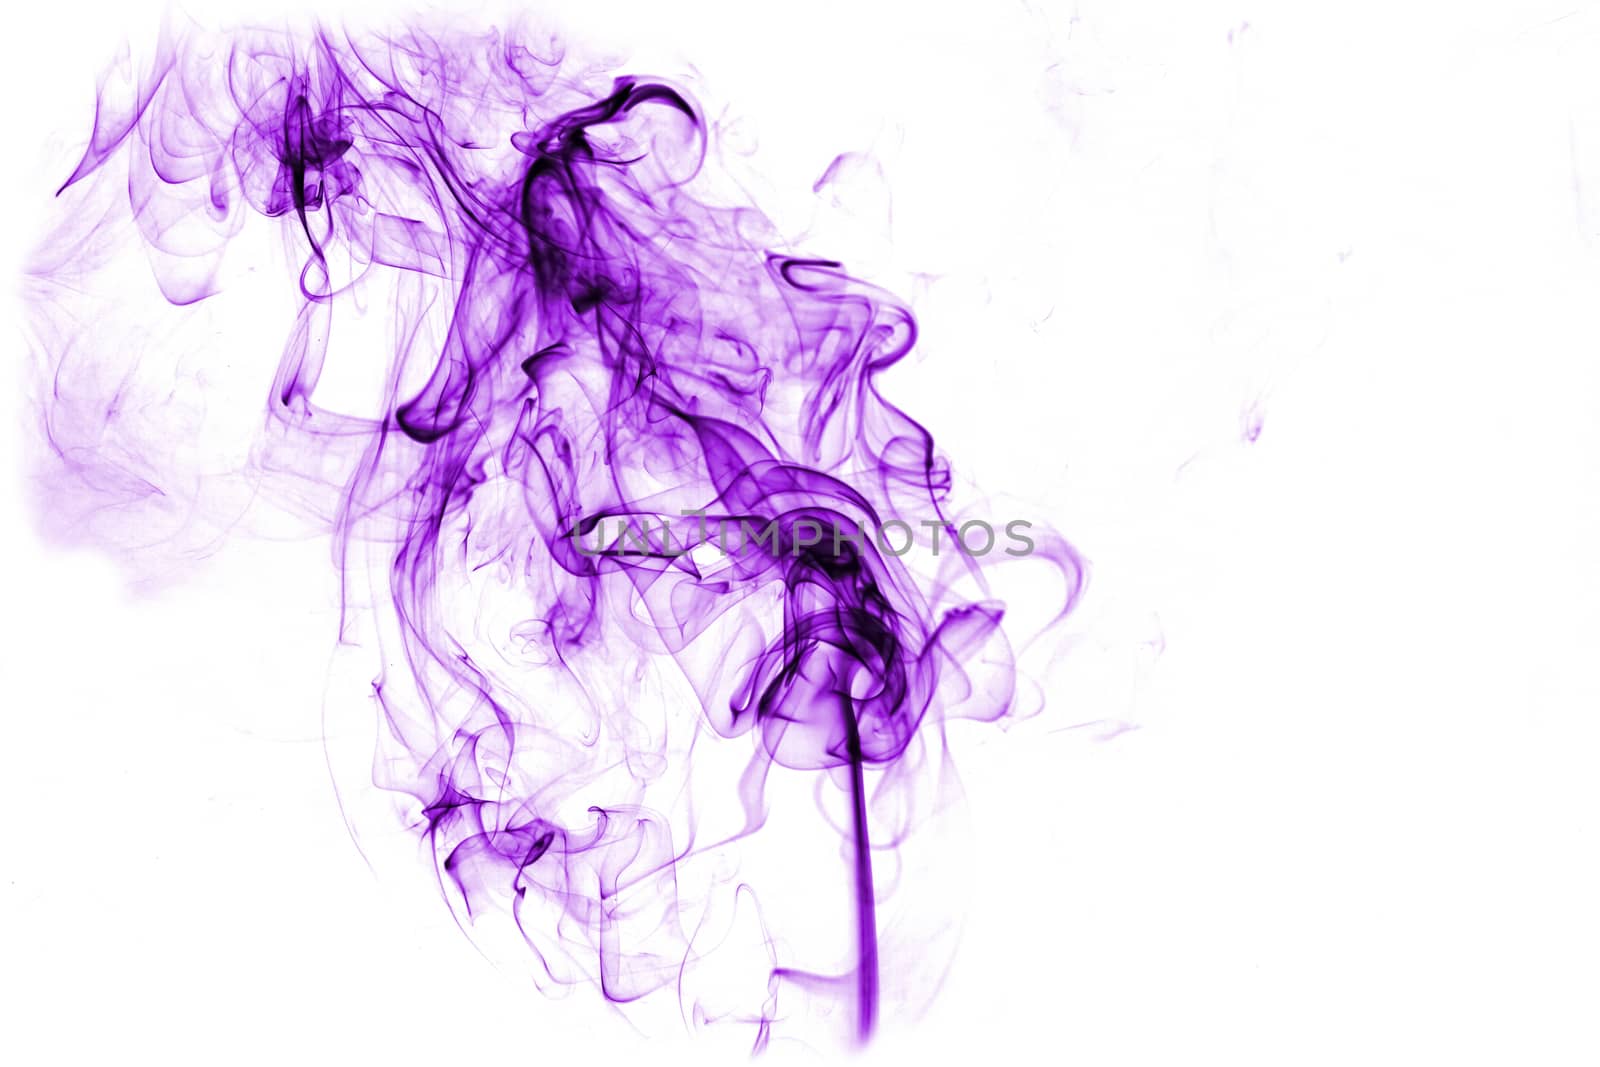 purple smoke with light on white background